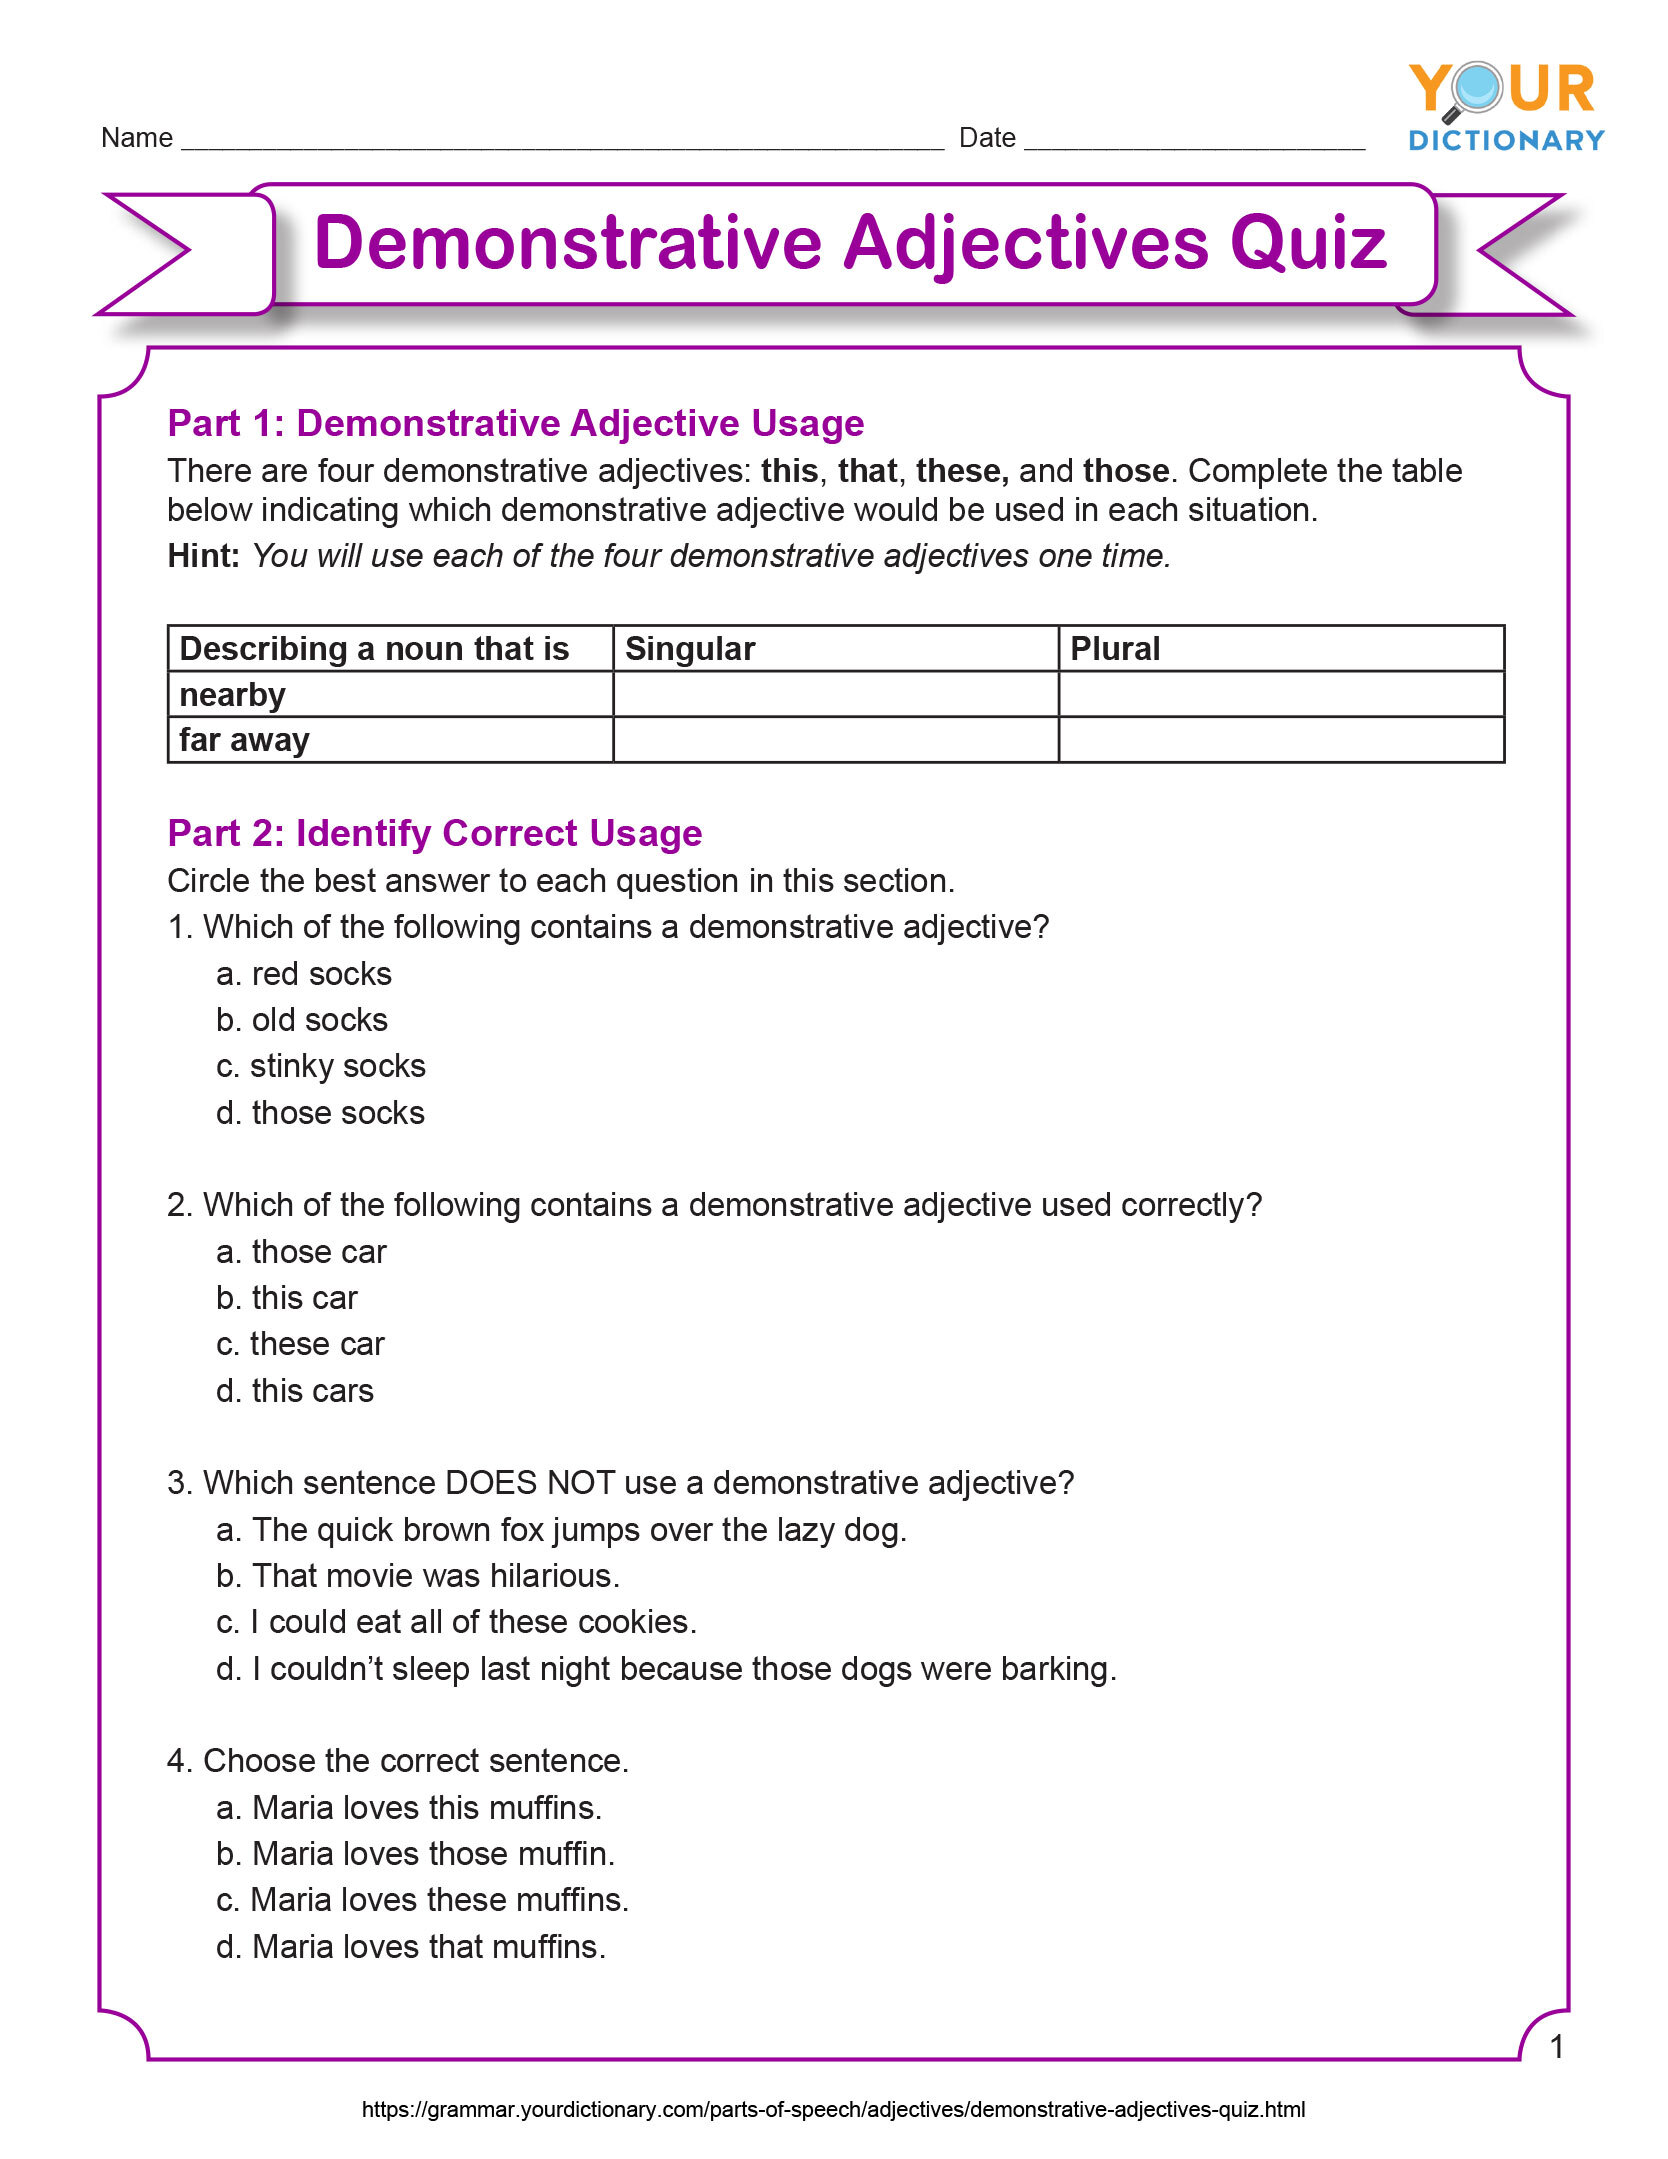 Demonstrative Adjectives Quiz